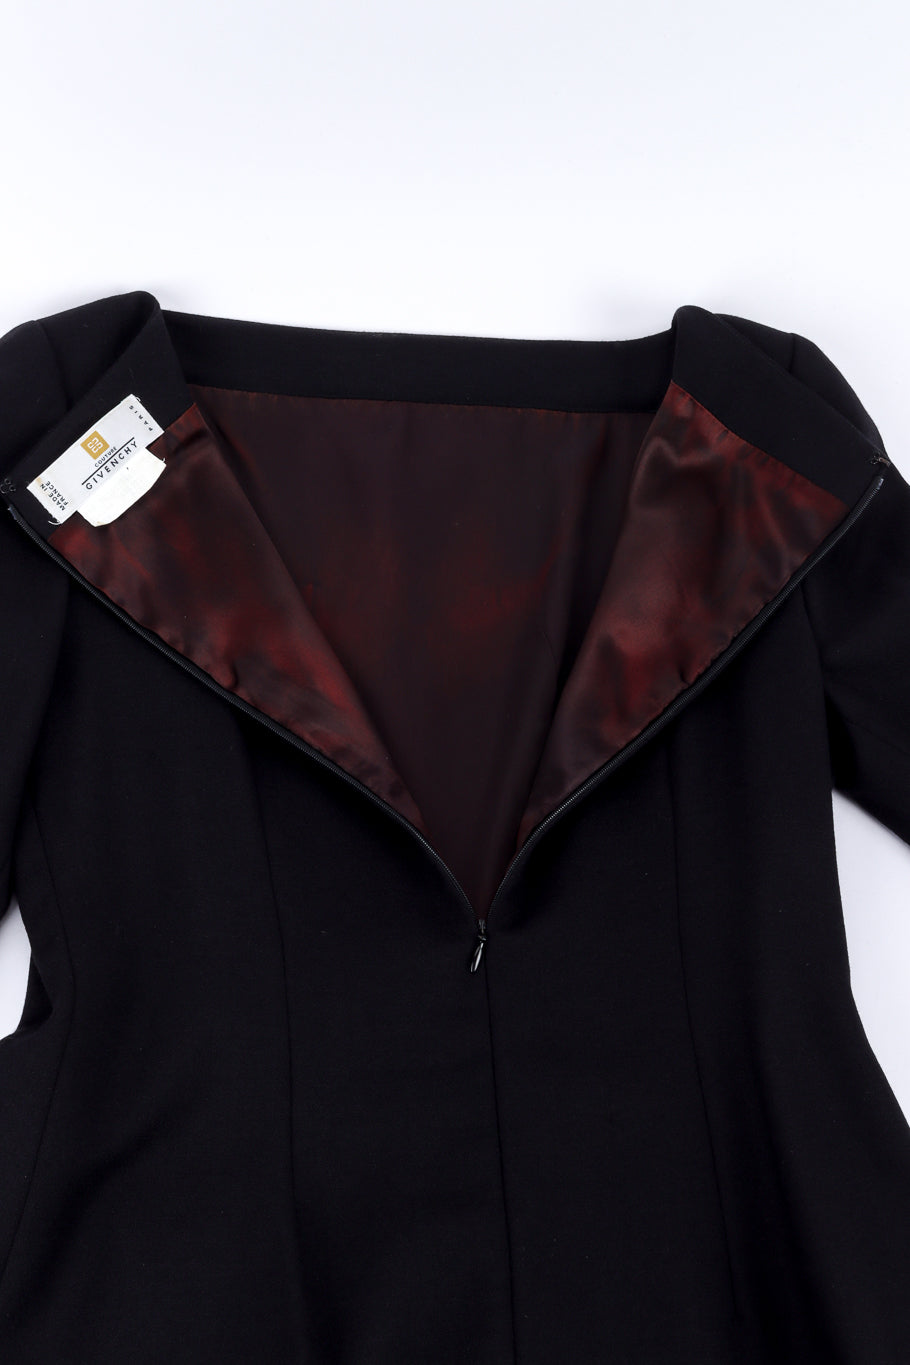 Vintage Givenchy Asymmetrical Hem Dress back unzipped @recessla